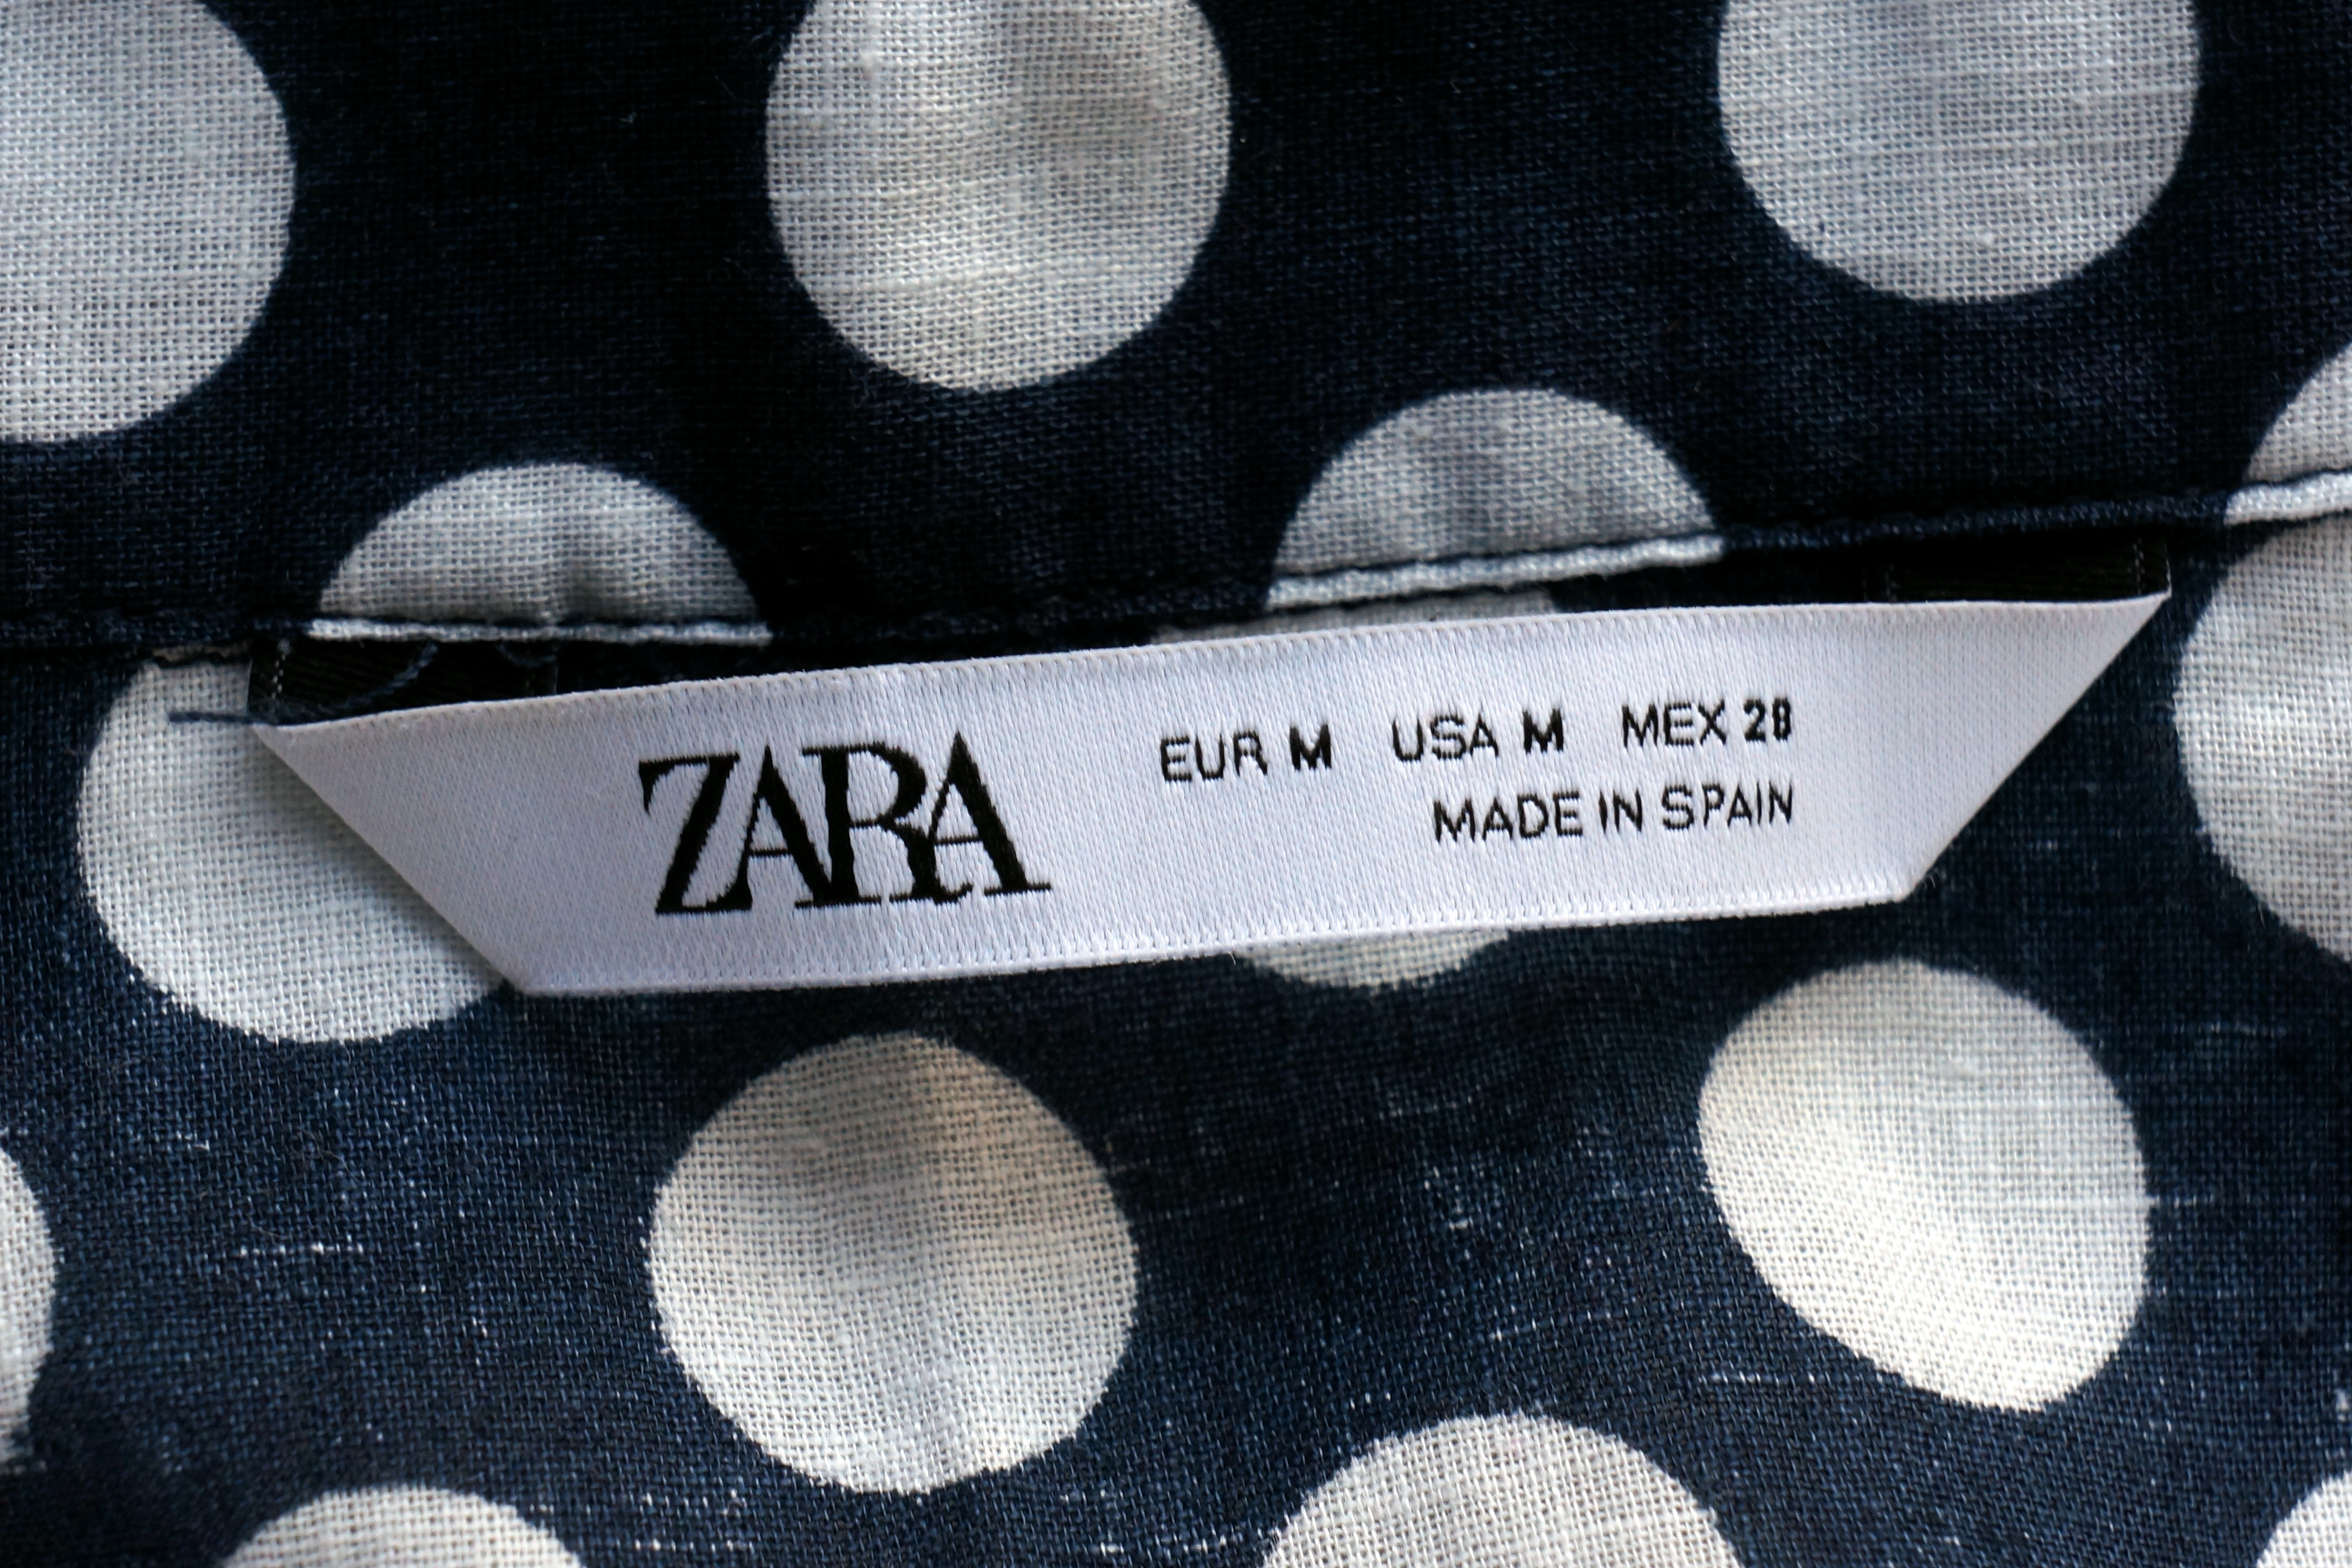 Zara Clothes Size Label